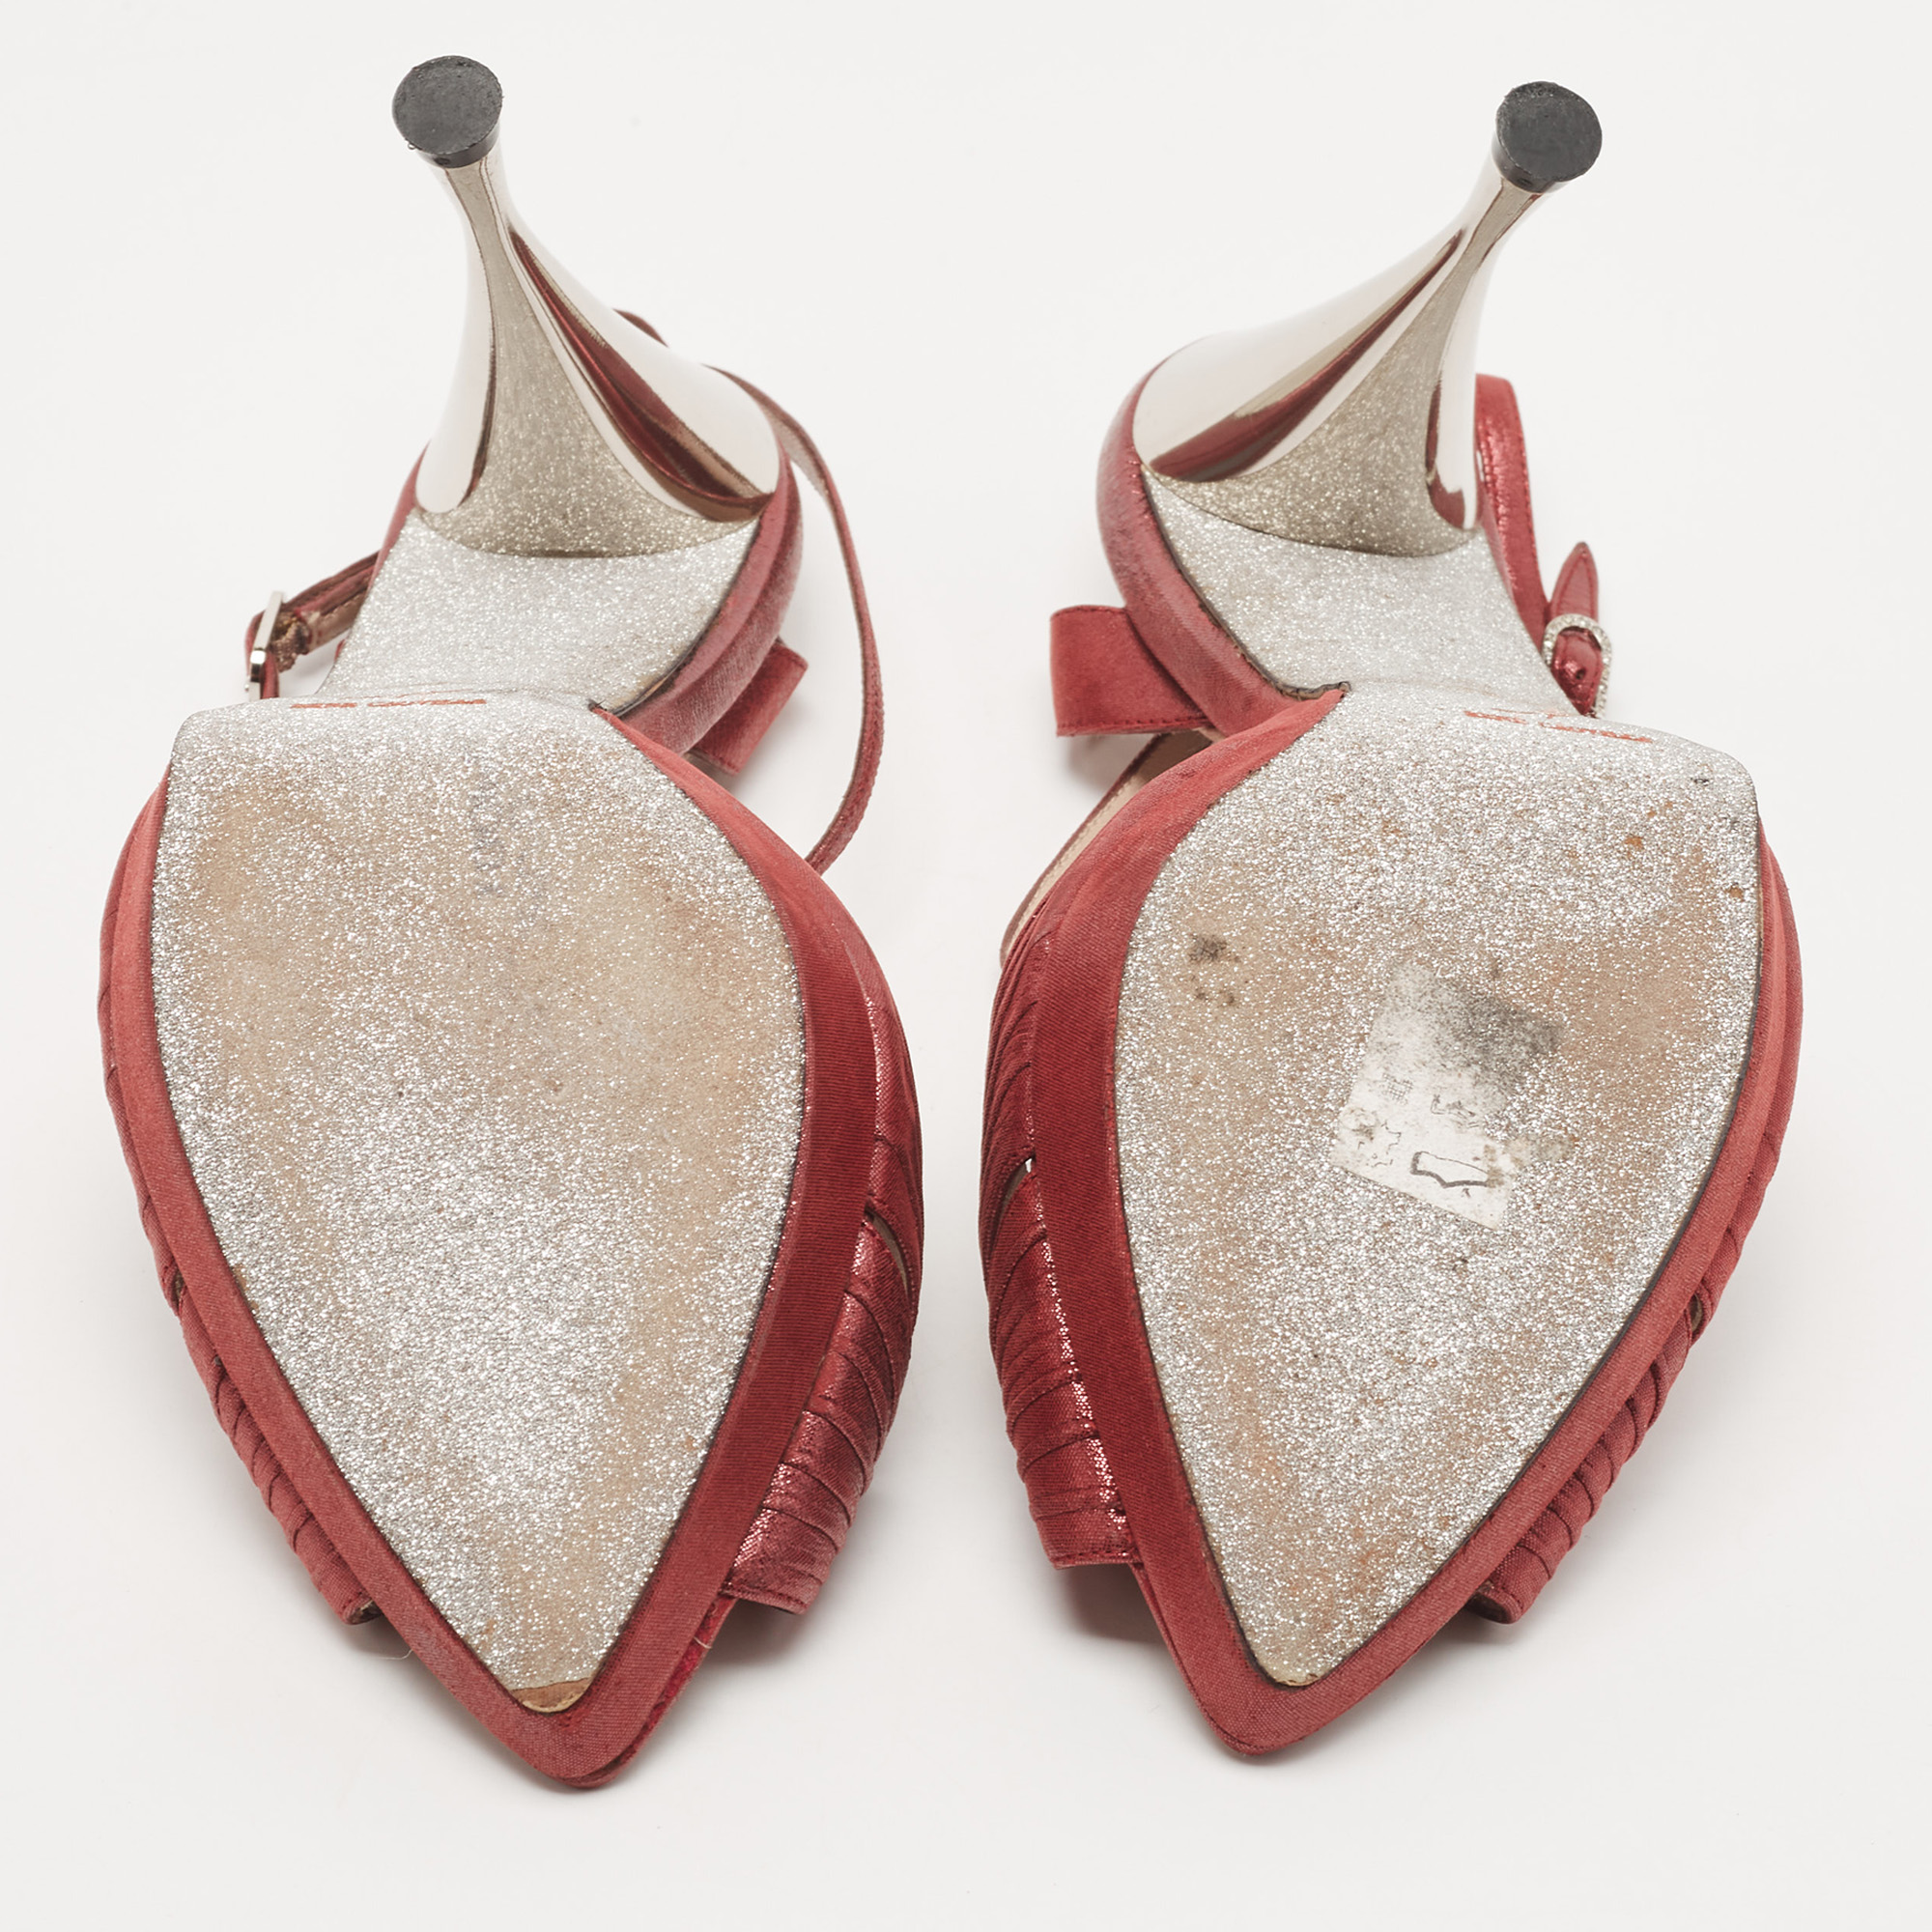 René Caovilla Burgundy Glitter Suede Platform Ankle Strap Sandals Size 41